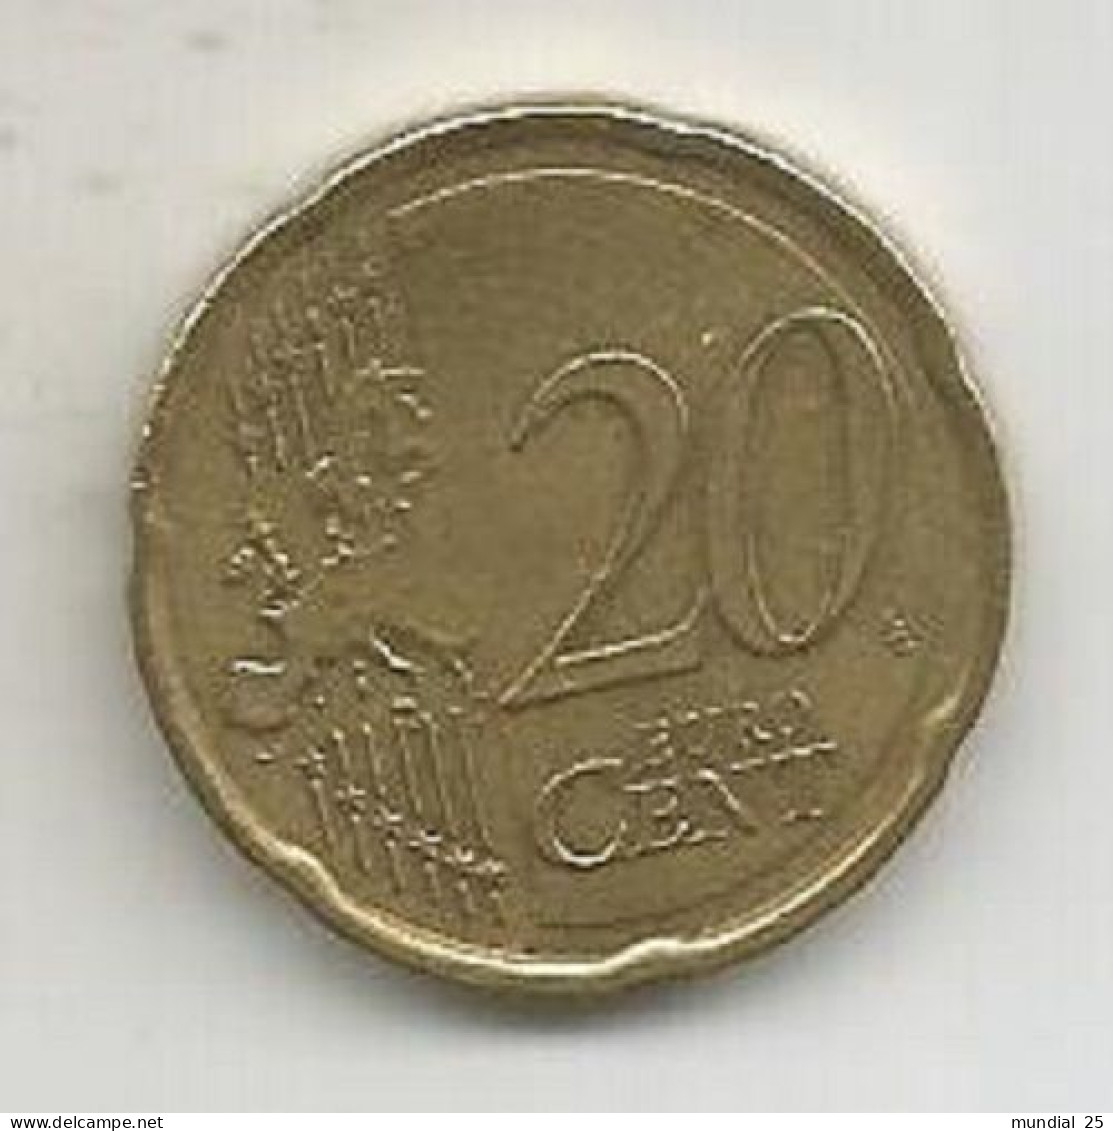 CYPRUS 20 EURO CENT 2008 - Zypern